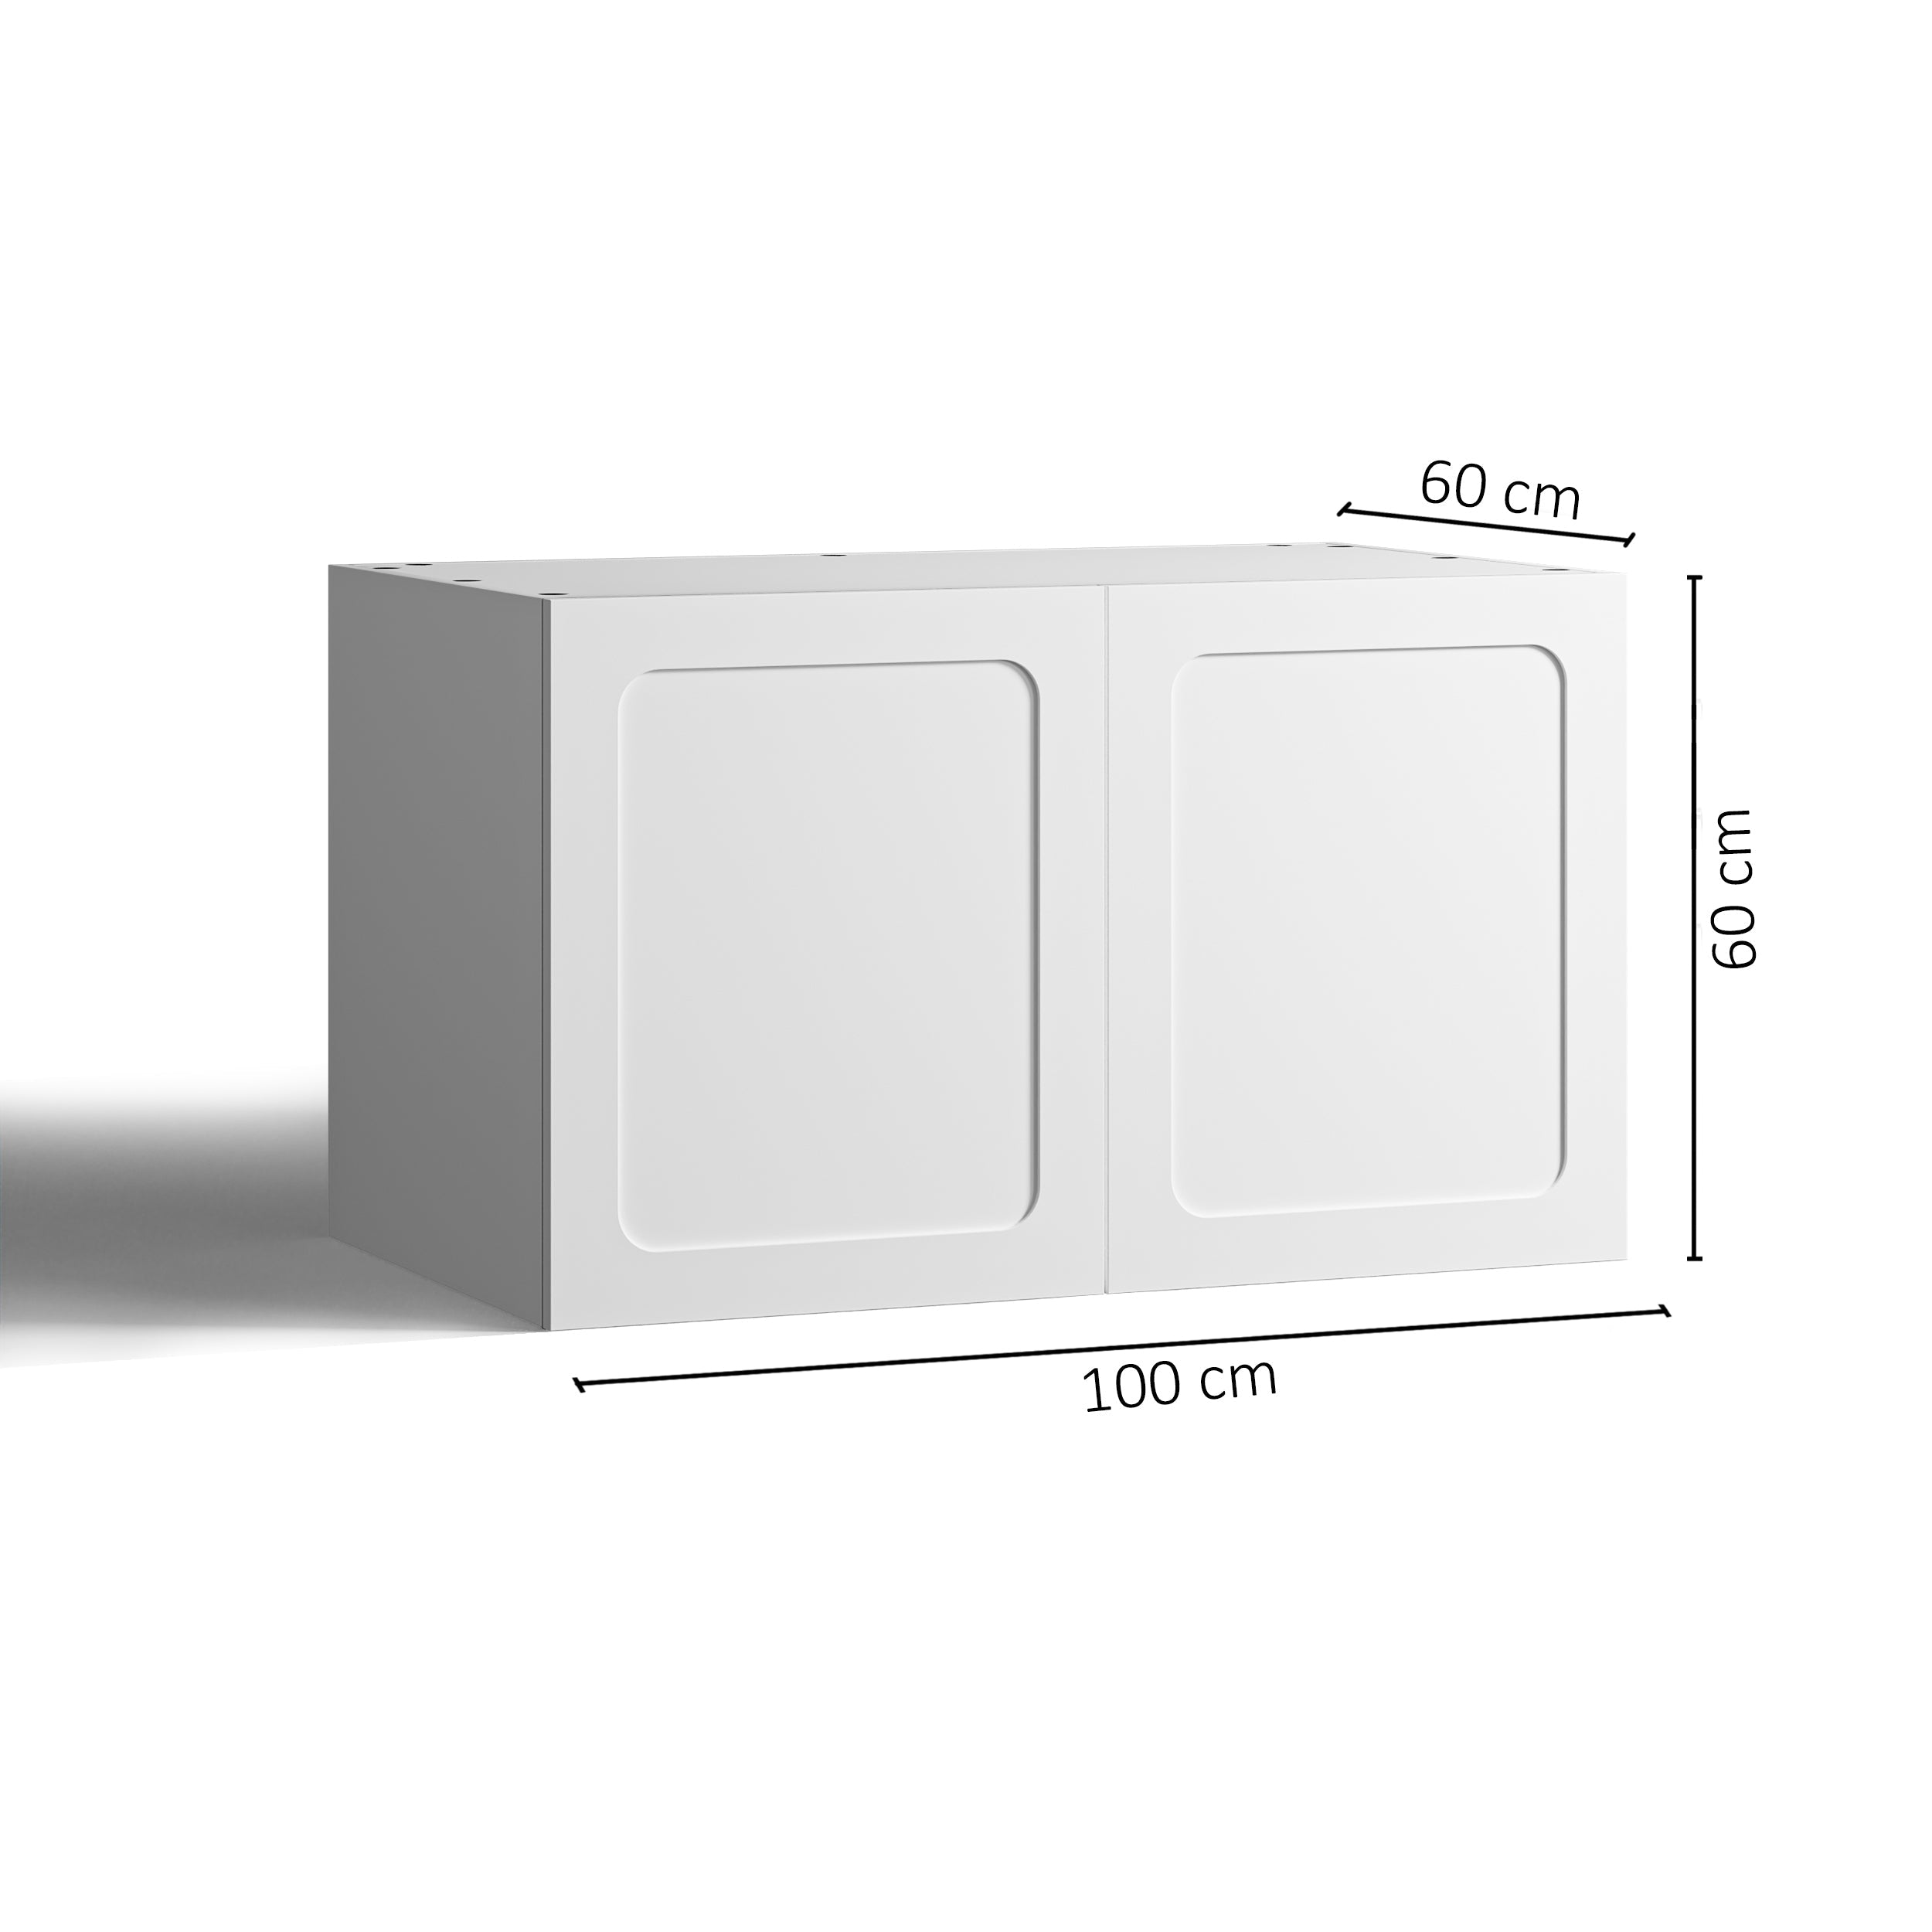 100x60 - Cabinet (58cm D) w 2 Doors - Round Shaker - RAW - PAX